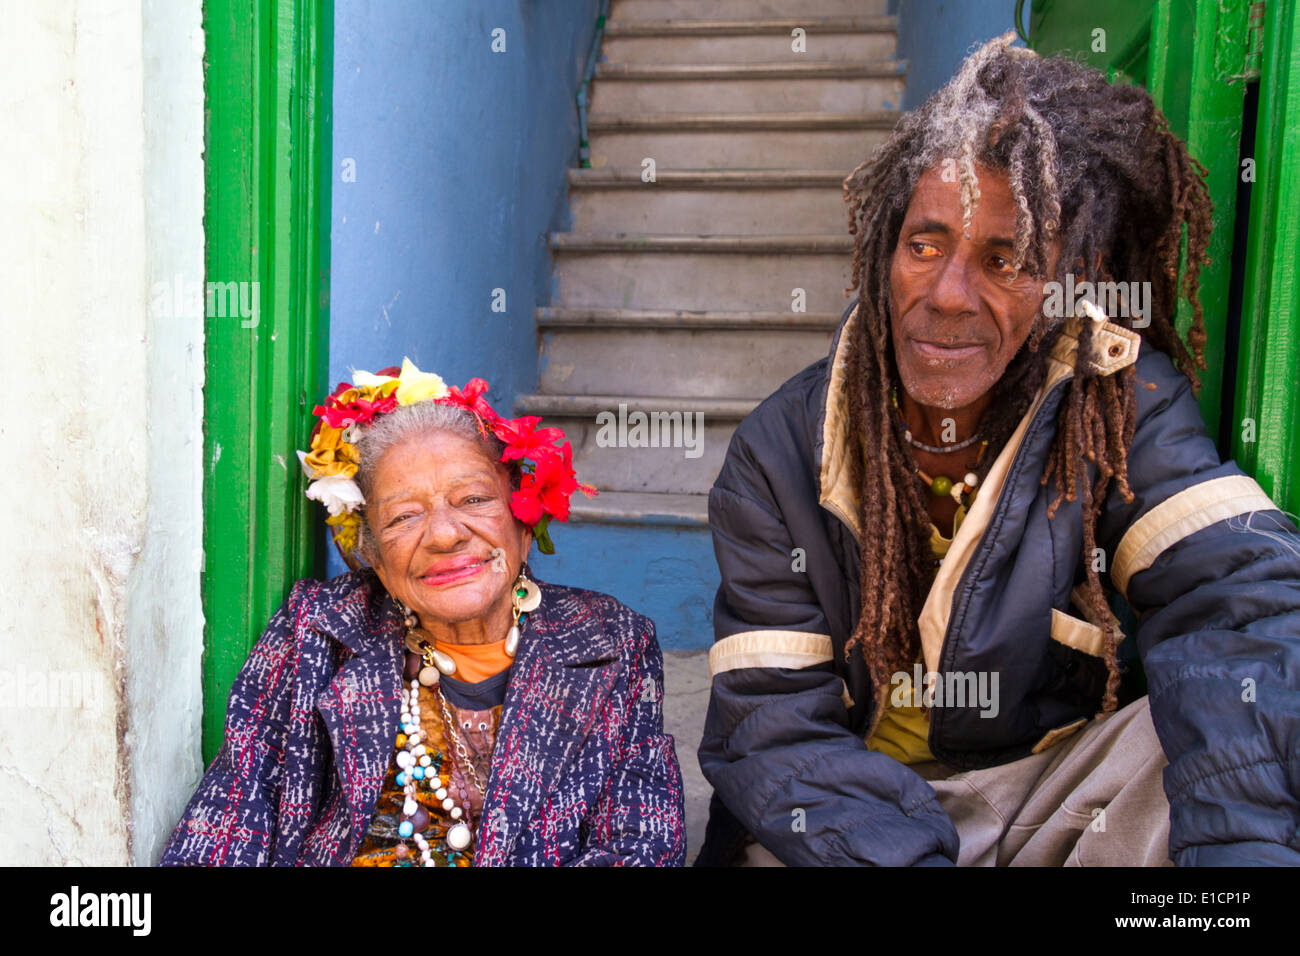 Smiling old lady and Rastafarian man sitting in doorway, in Havana, Cuba Stock Photo